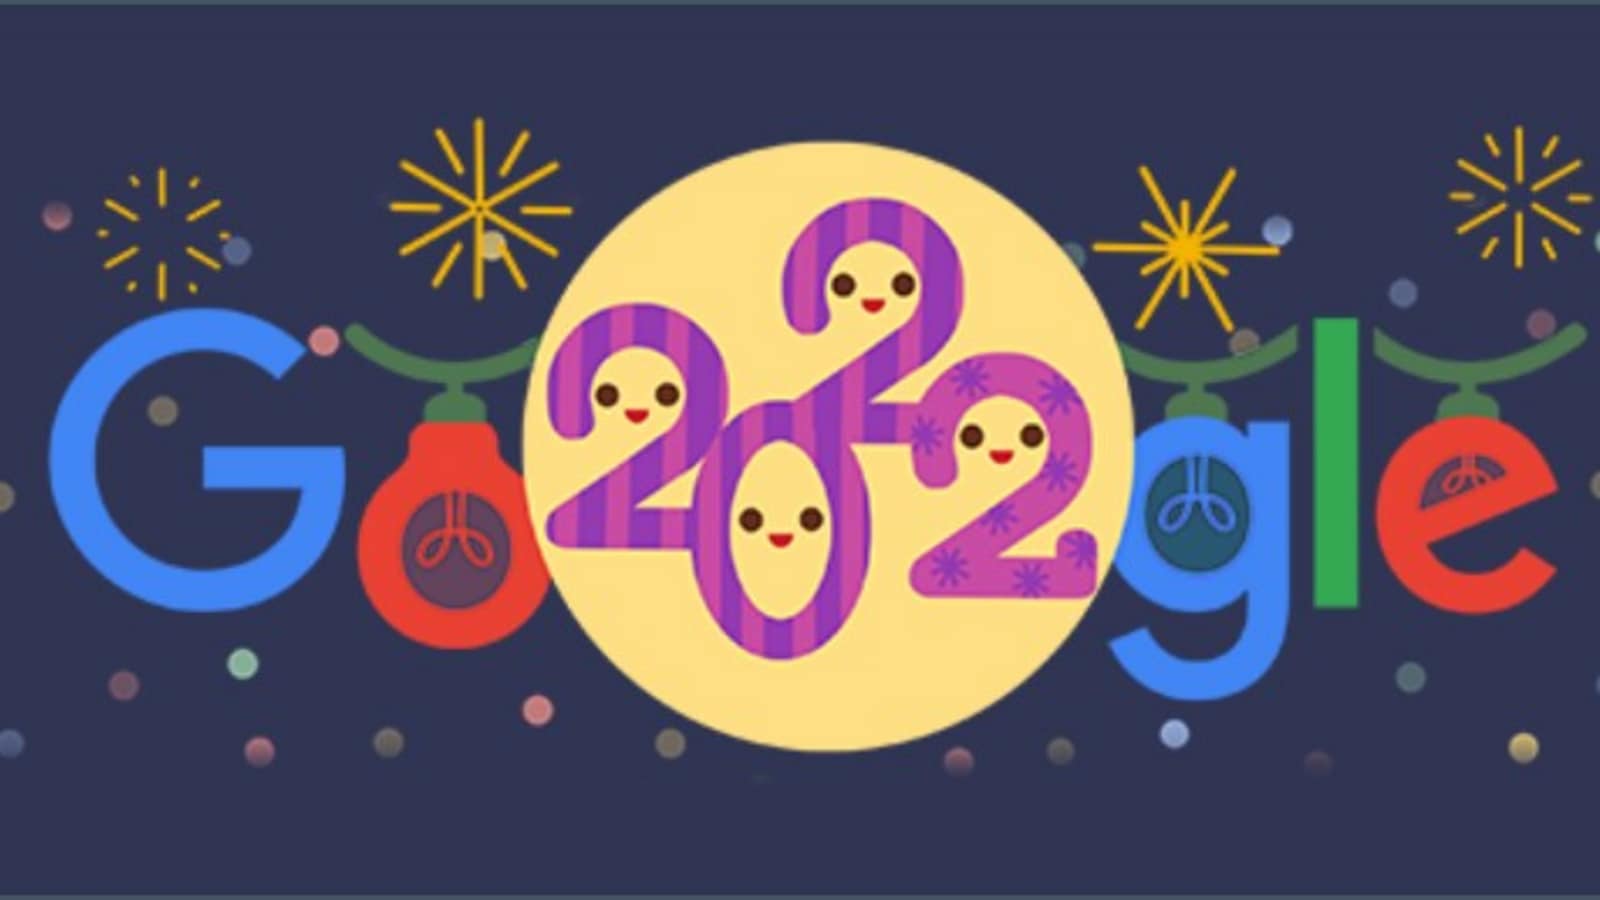 Doodle Snow Games - Day 14 Doodle - Google Doodles